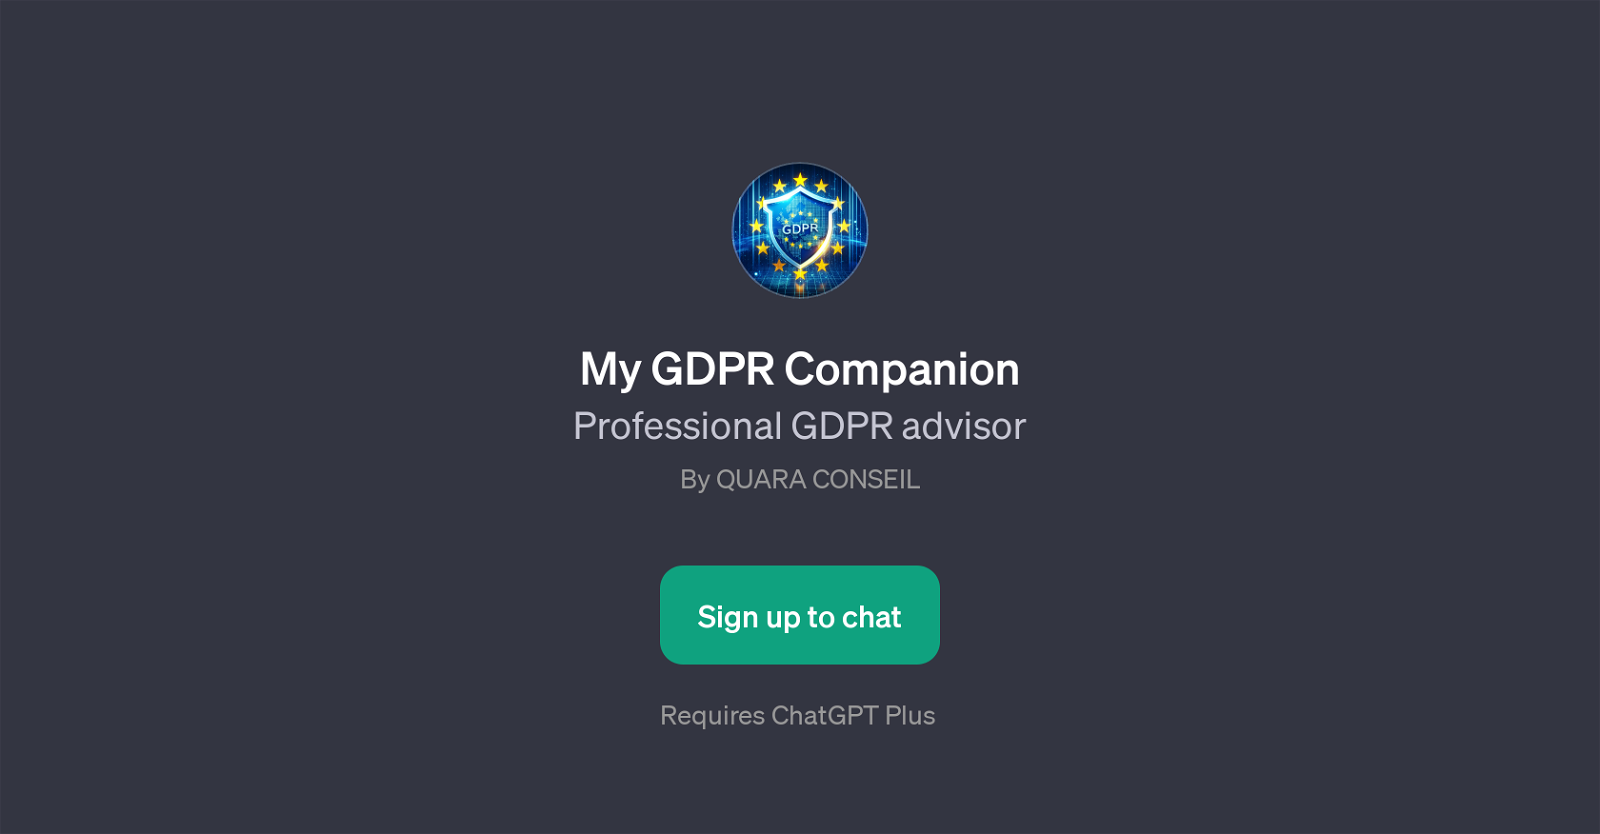 My GDPR Companion website